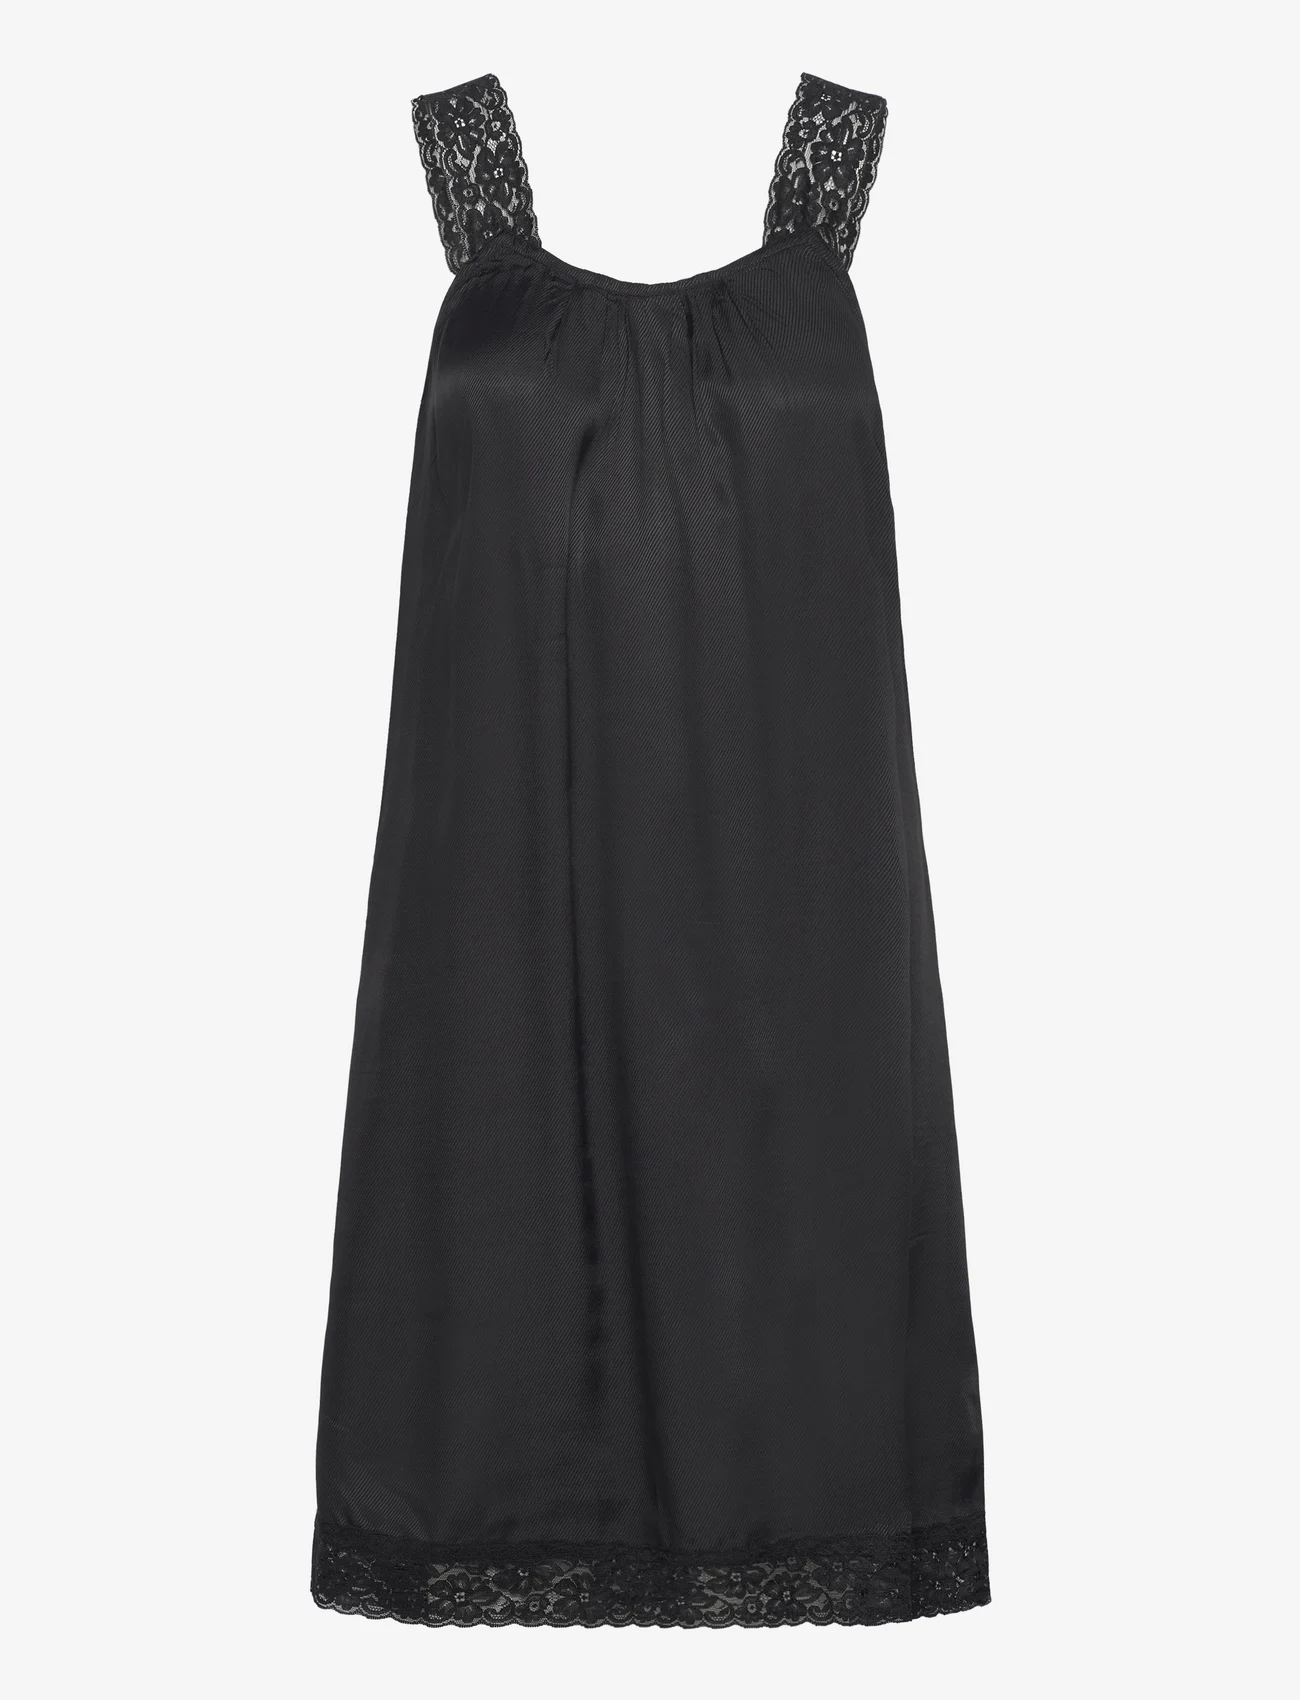 Cream - CRLinga Dress - Kim Fit - korta klänningar - pitch black - 0